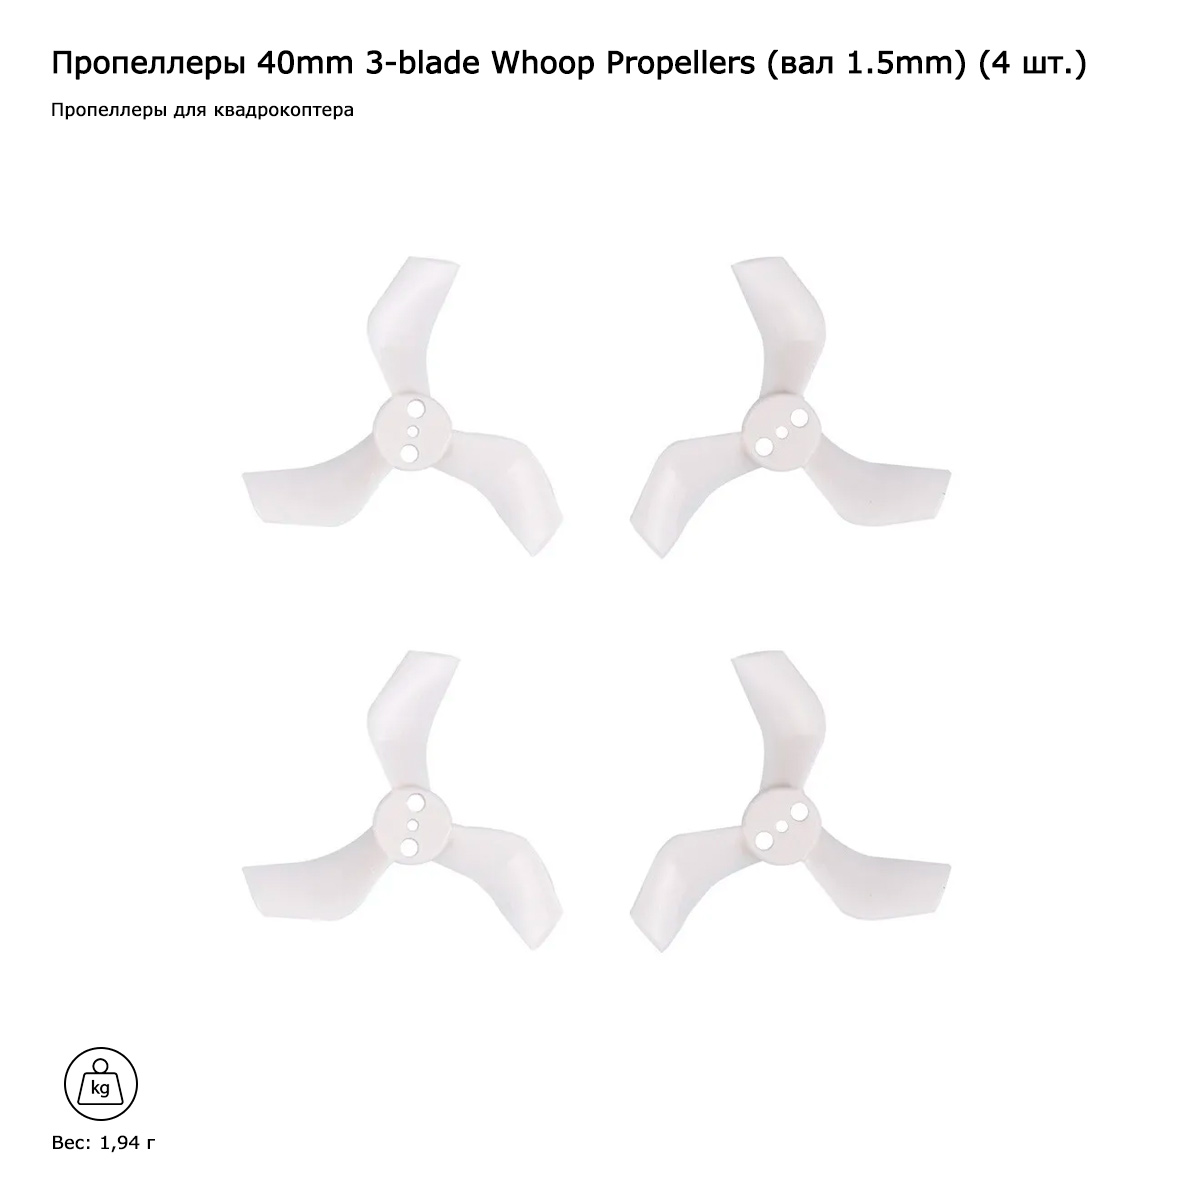 Пропеллеры 40mm 3-blade Whoop Propellers (вал 1.5mm) (4 шт.)